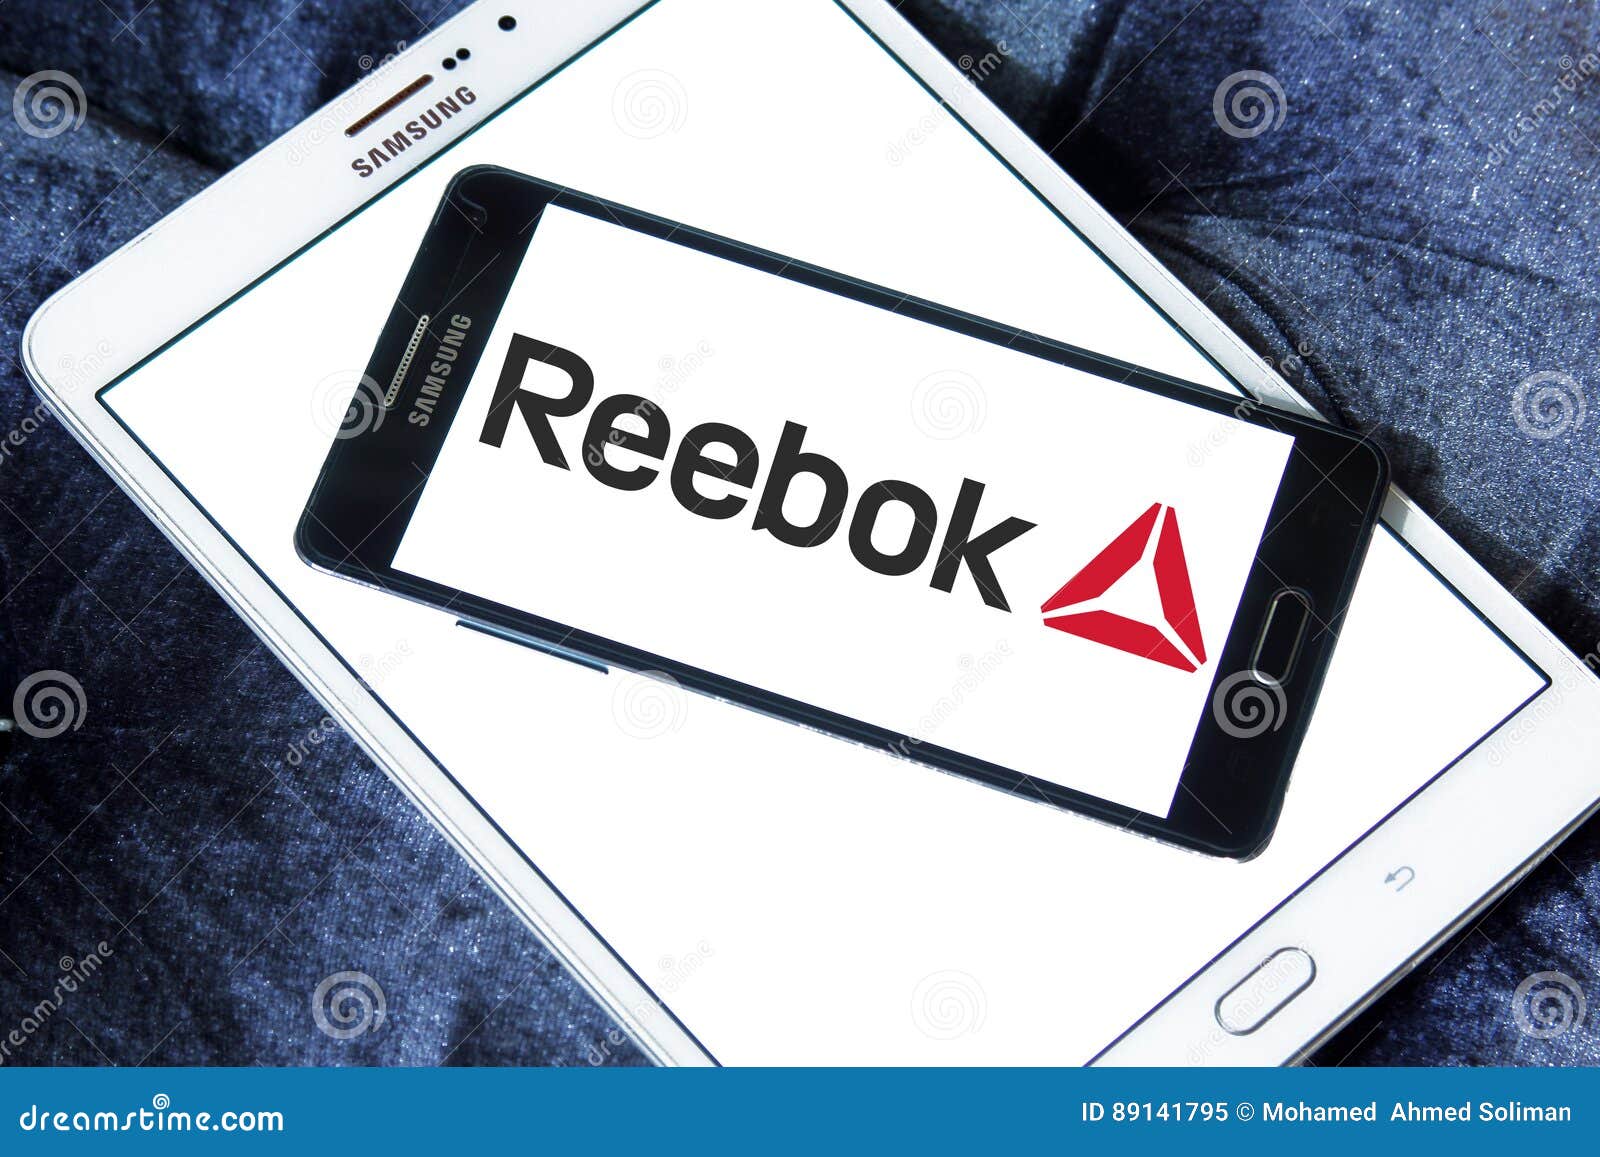 Reebok logo editorial image. Image of technology, reebok - 89141795